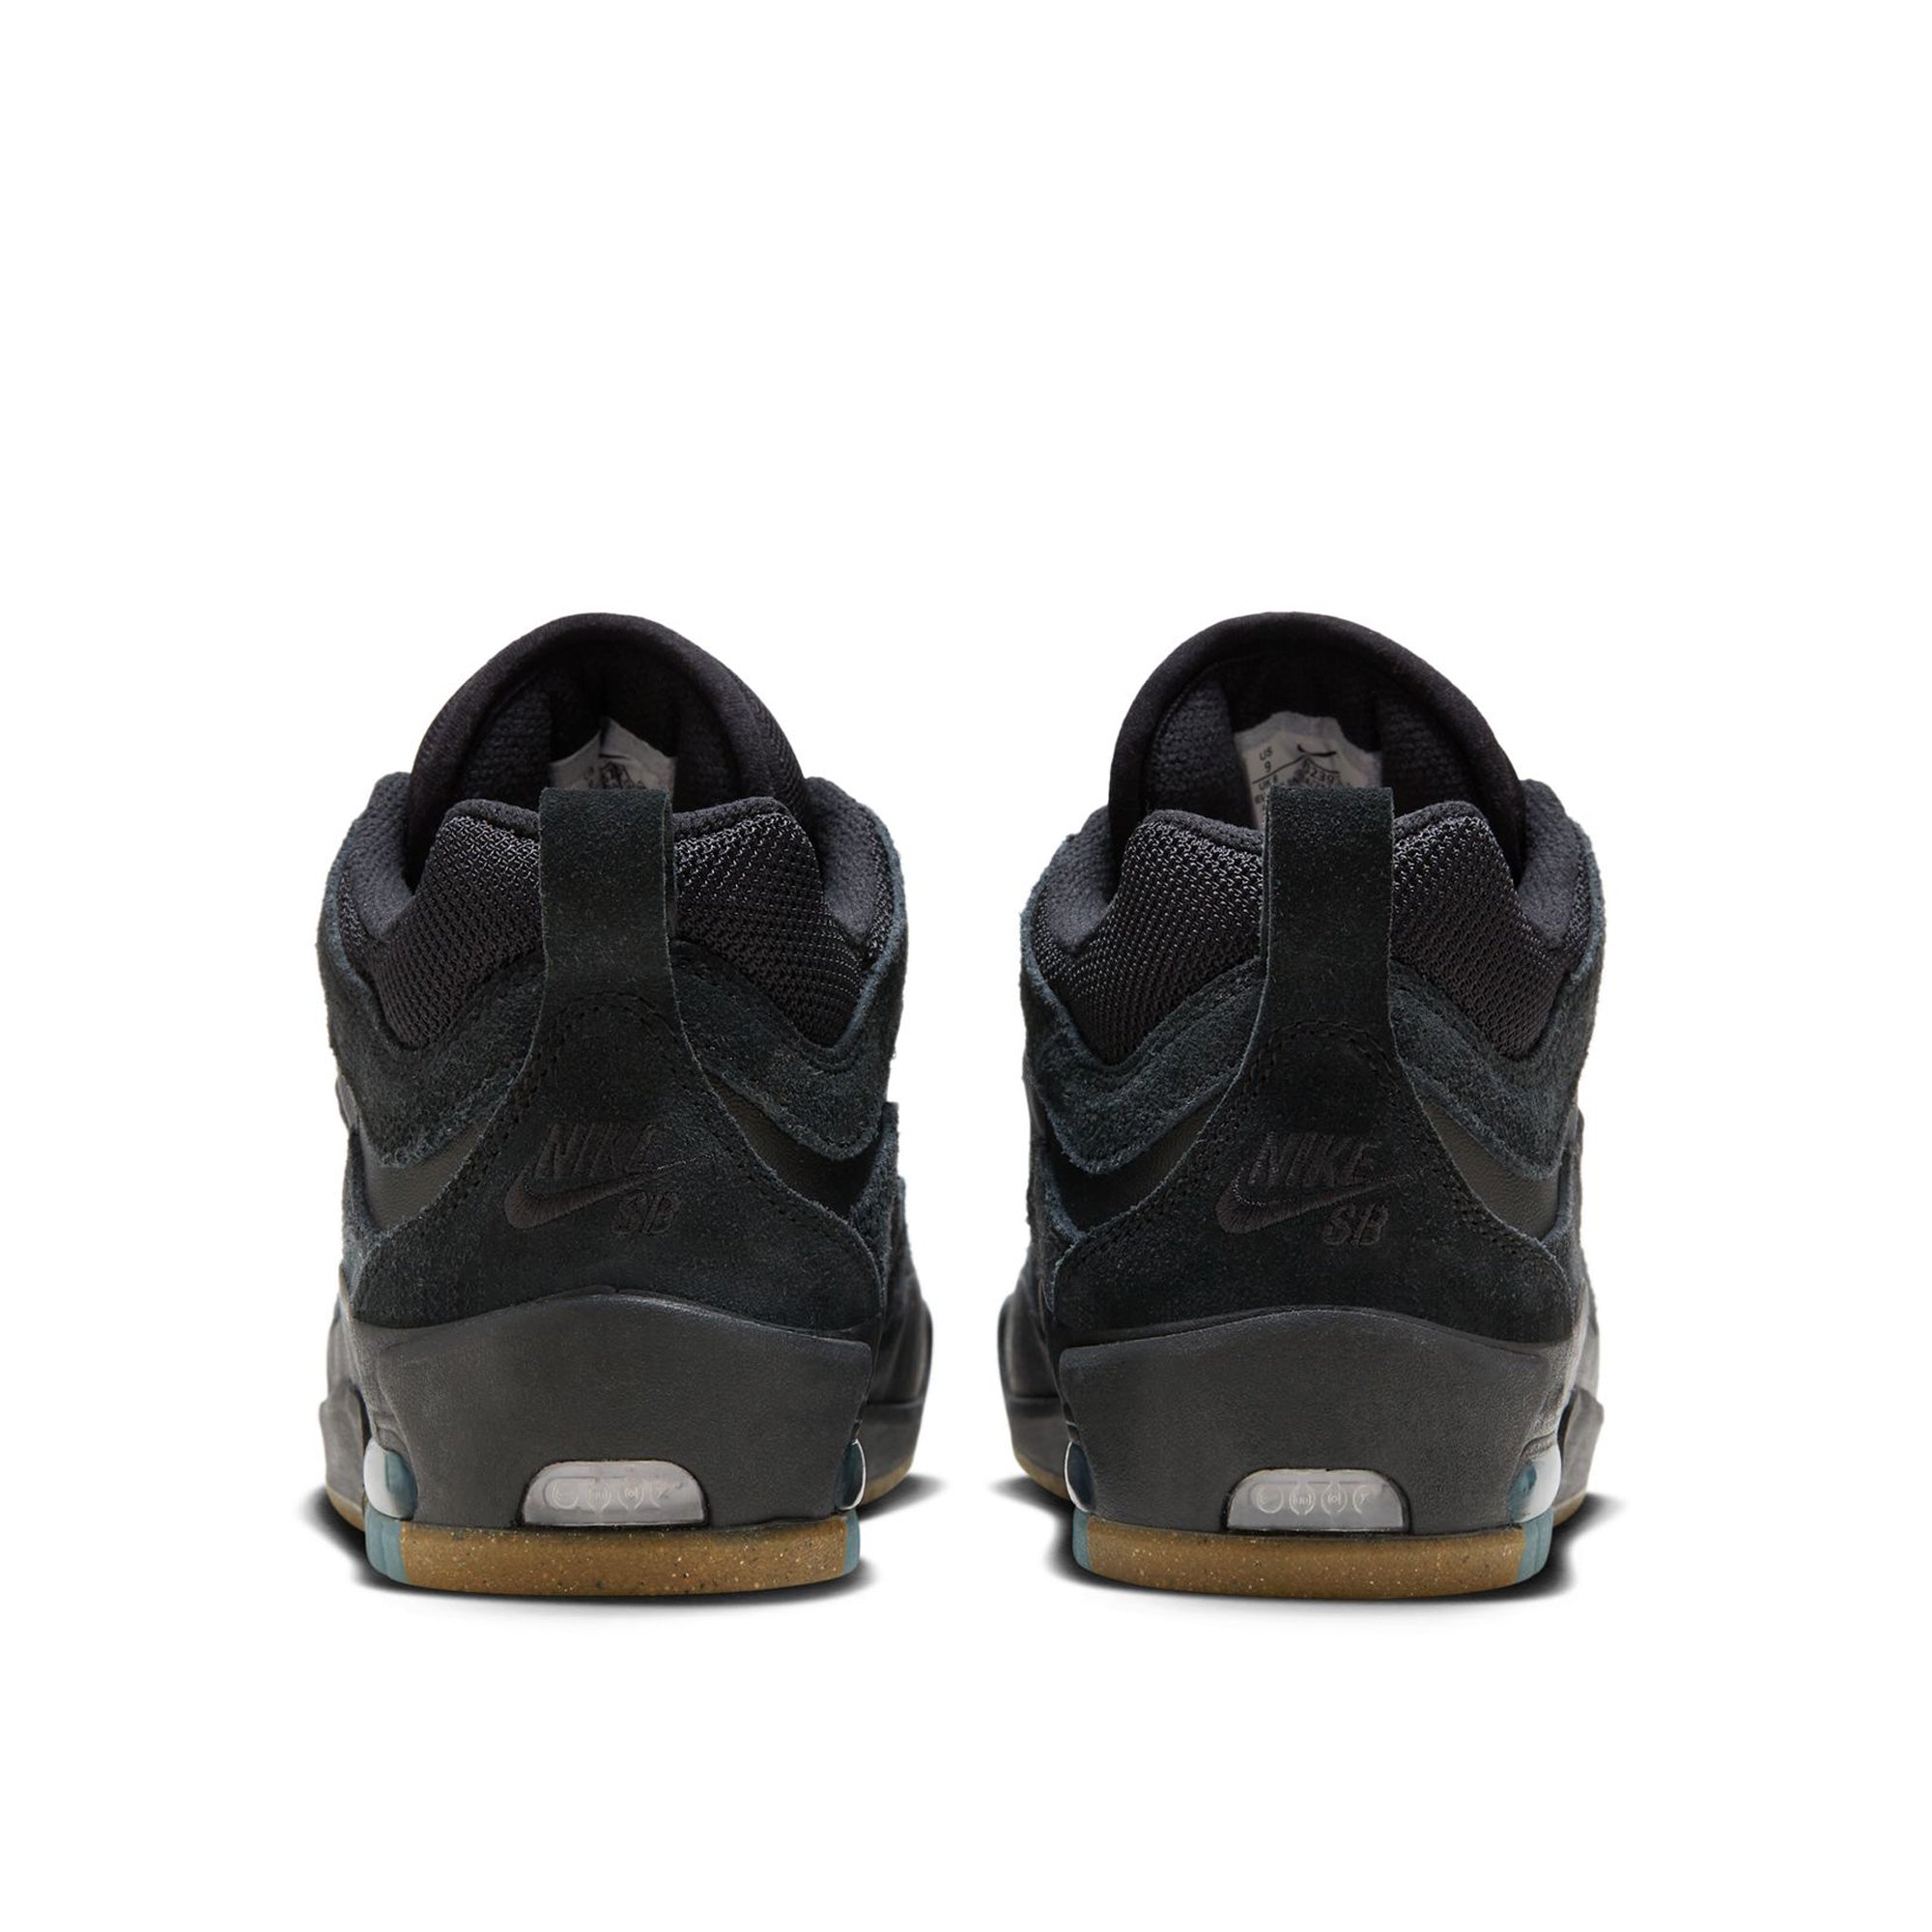 Nike Air Max Ishod Shoe - Black/Anthracite-Black